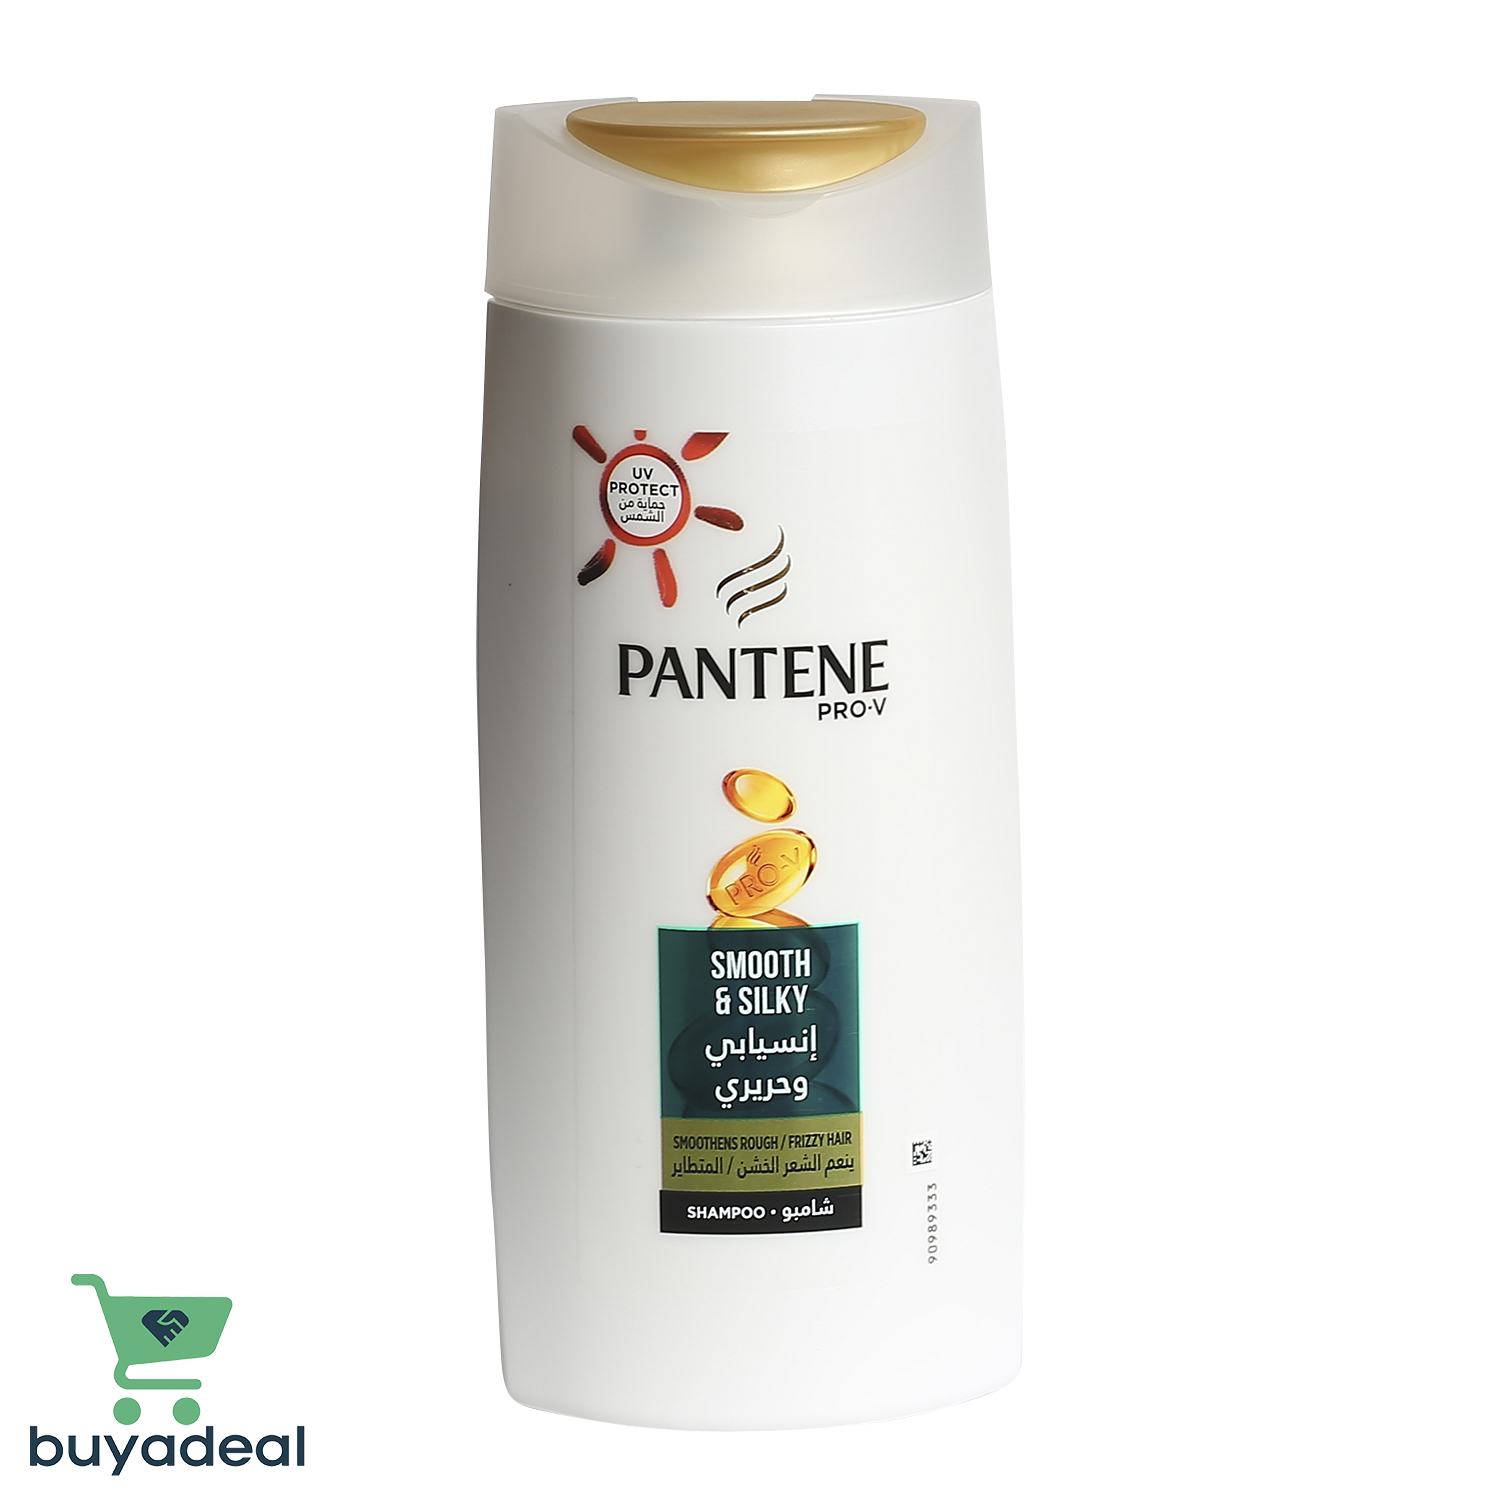 Buyadeal Product Pantene Pro-V Smooth & Silky Shampoo - 700ml